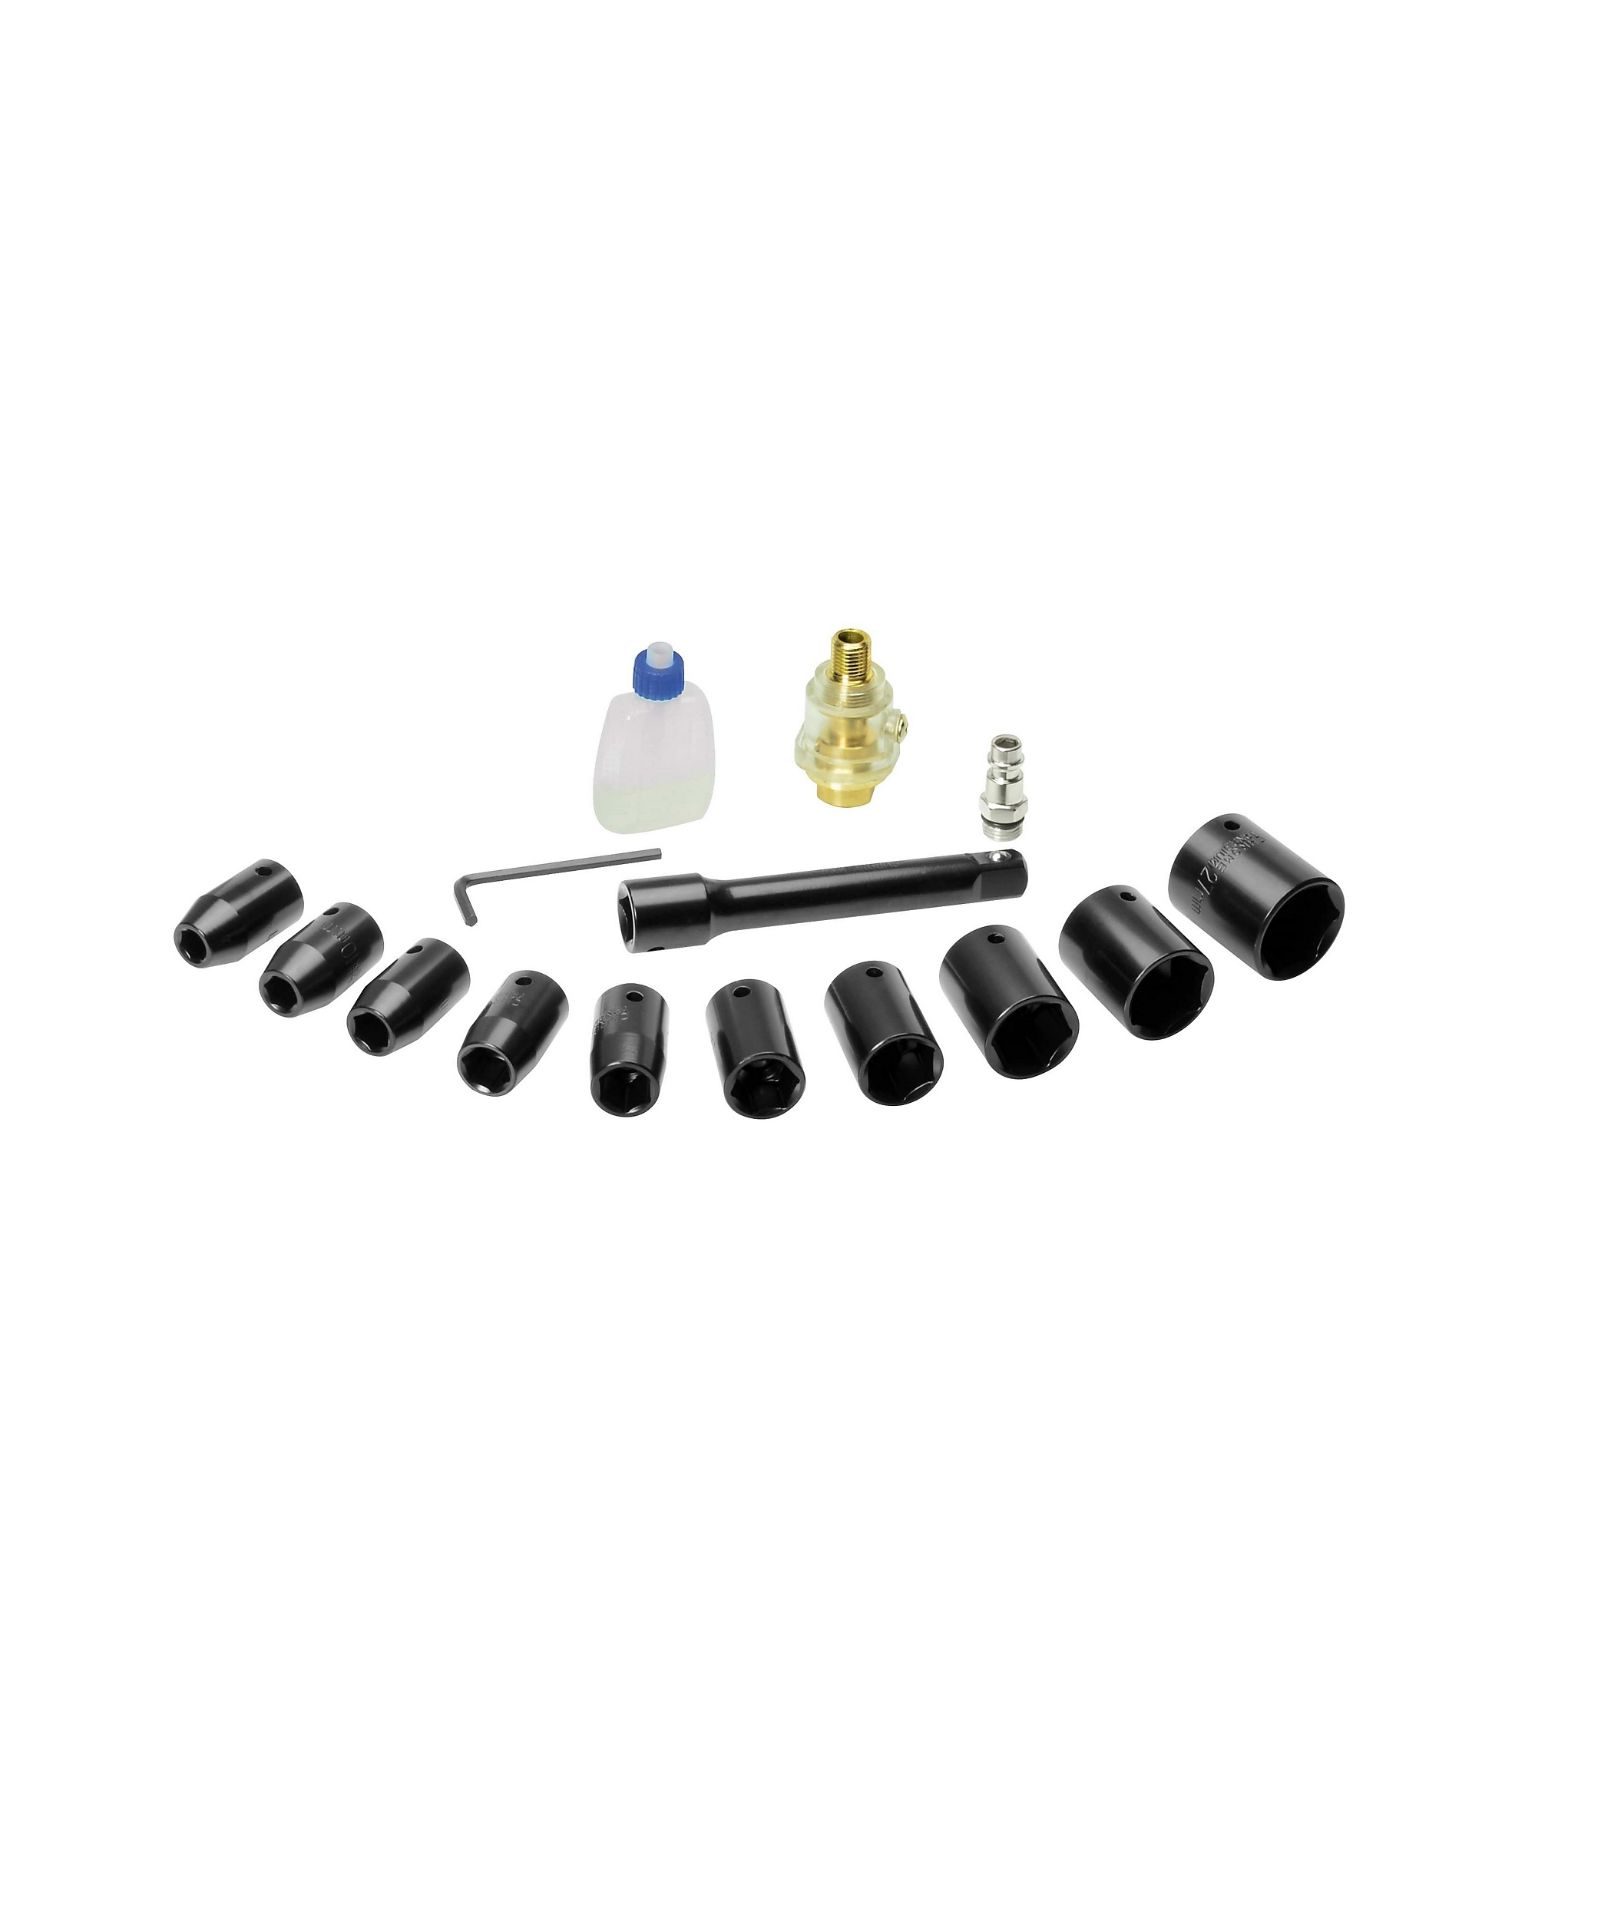 2 X Brand New Black & Decker Impact Wrench Kit, • 1/2 inch Impact wrench • 10 Impact Sockets (9,10, - Image 3 of 4